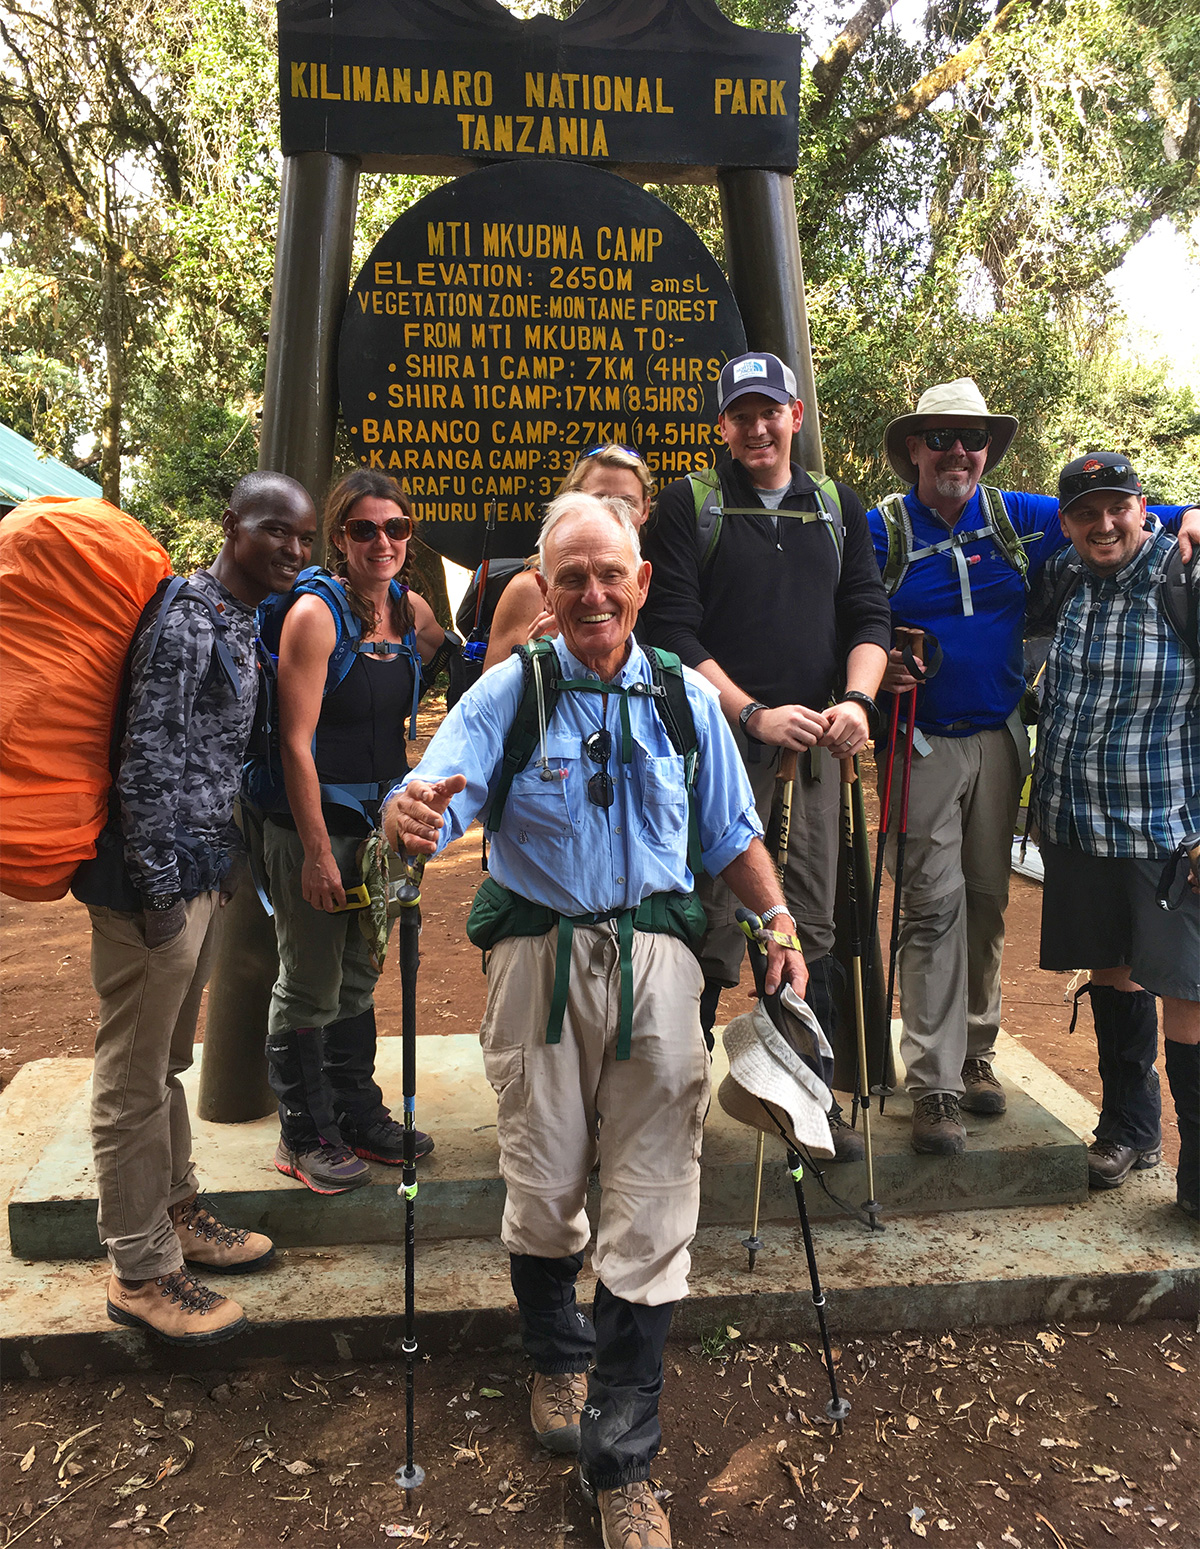 80 year old Kilimanjaro summiter with trekking group